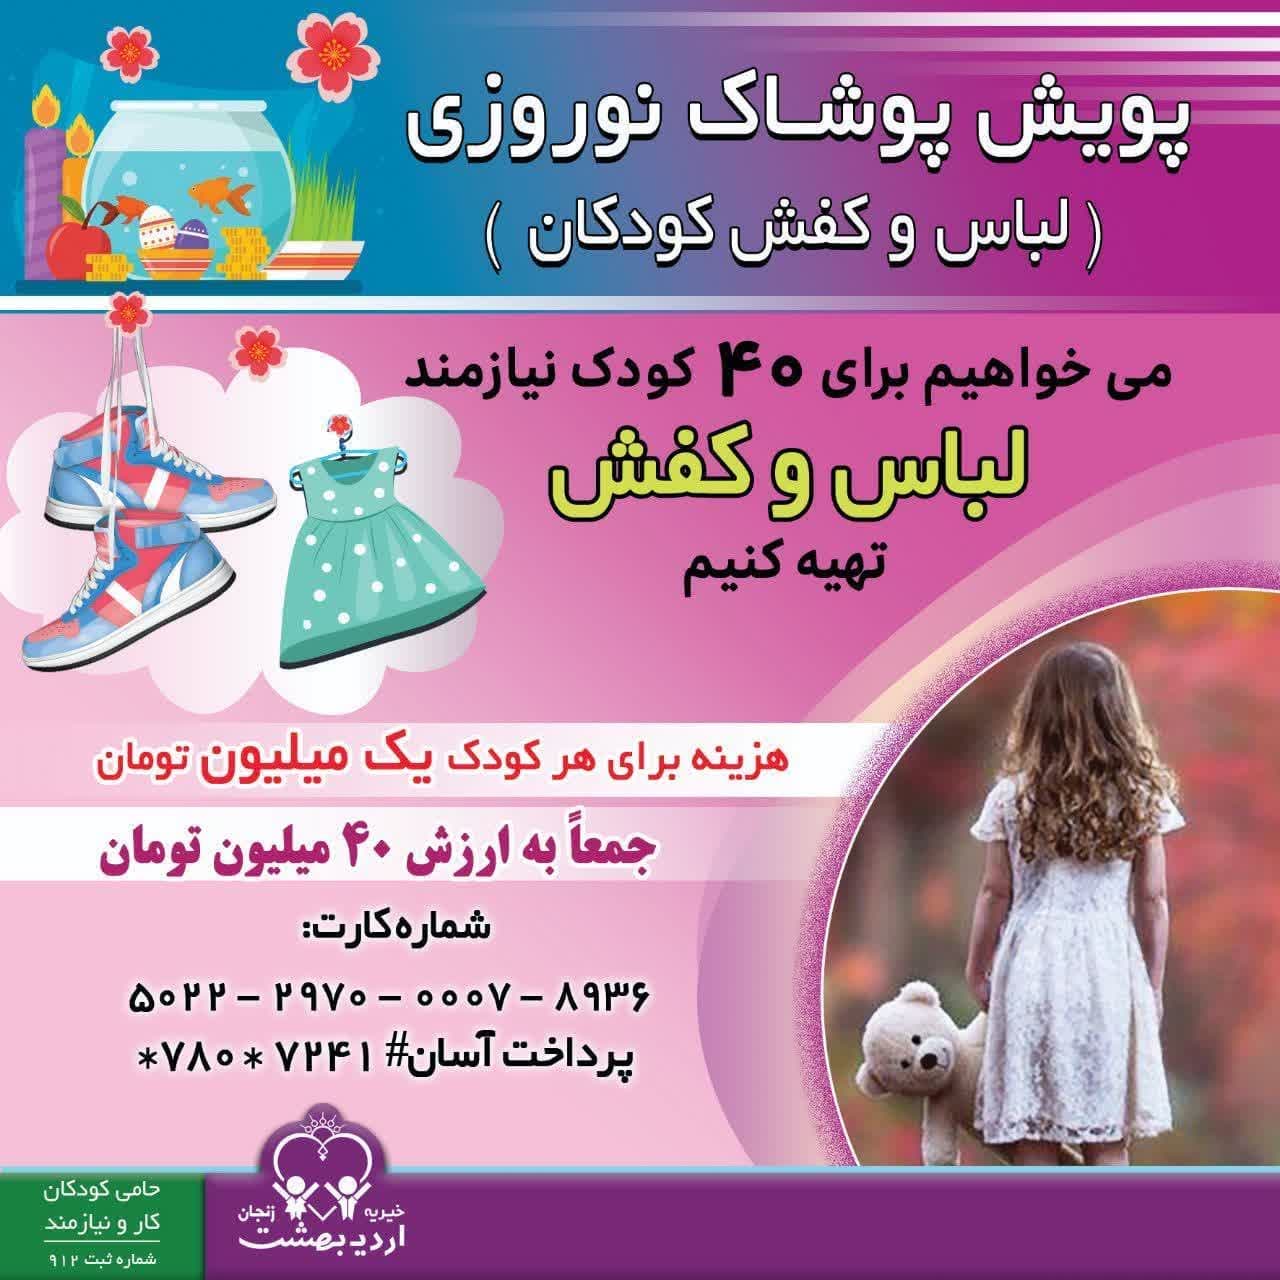 You are currently viewing پویش تهیه لباس و کفش عیدنوروز برای ۴۰ کودک تحت پوشش خیریه اردیبهشت زنجان